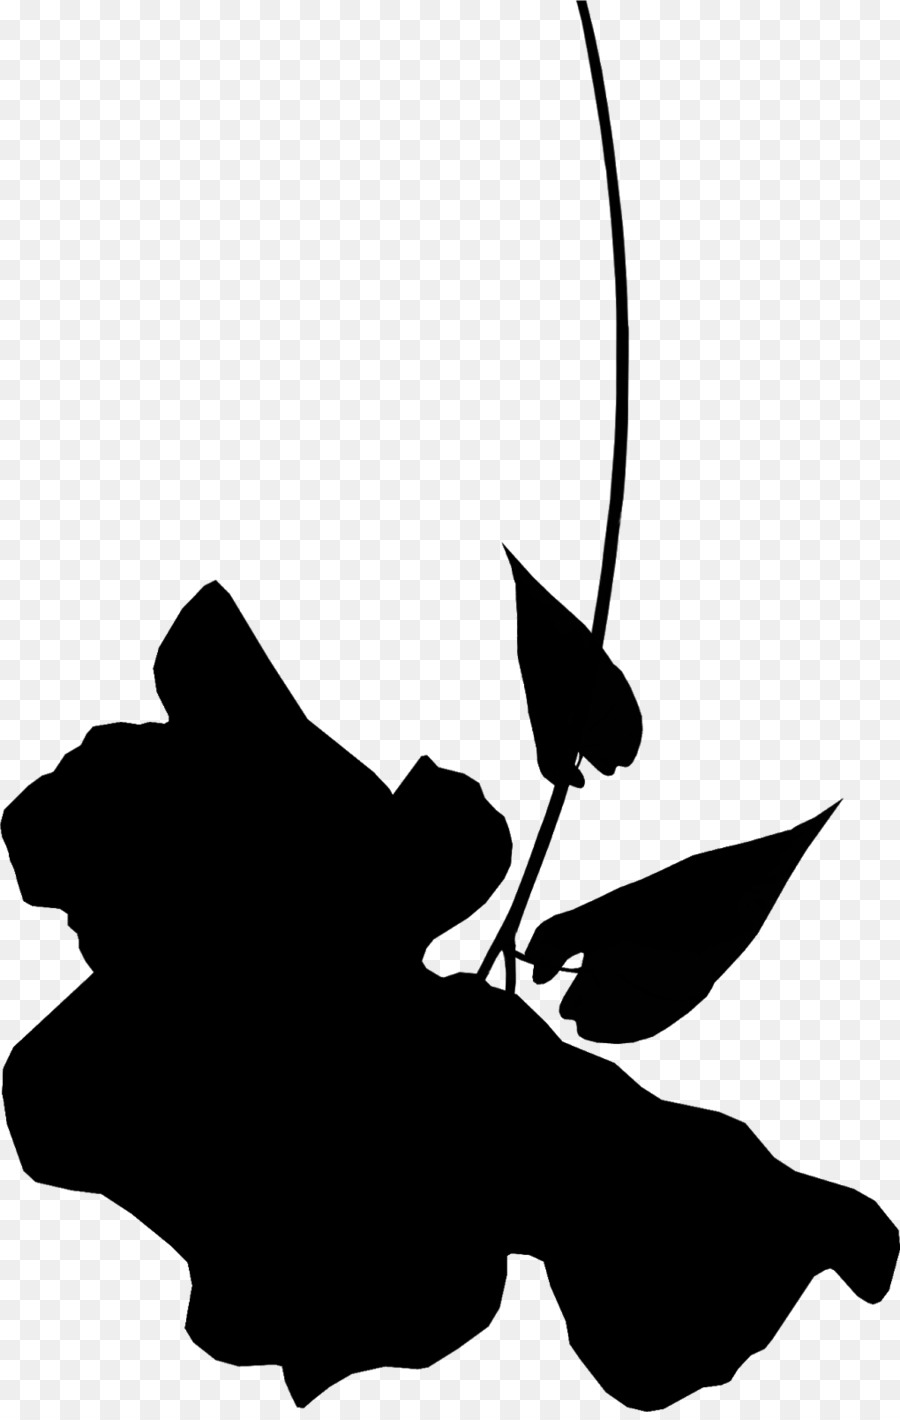 Clip art Black & White - M Flower Silhouette Leaf -  png download - 1020*1600 - Free Transparent Black  White  M png Download.